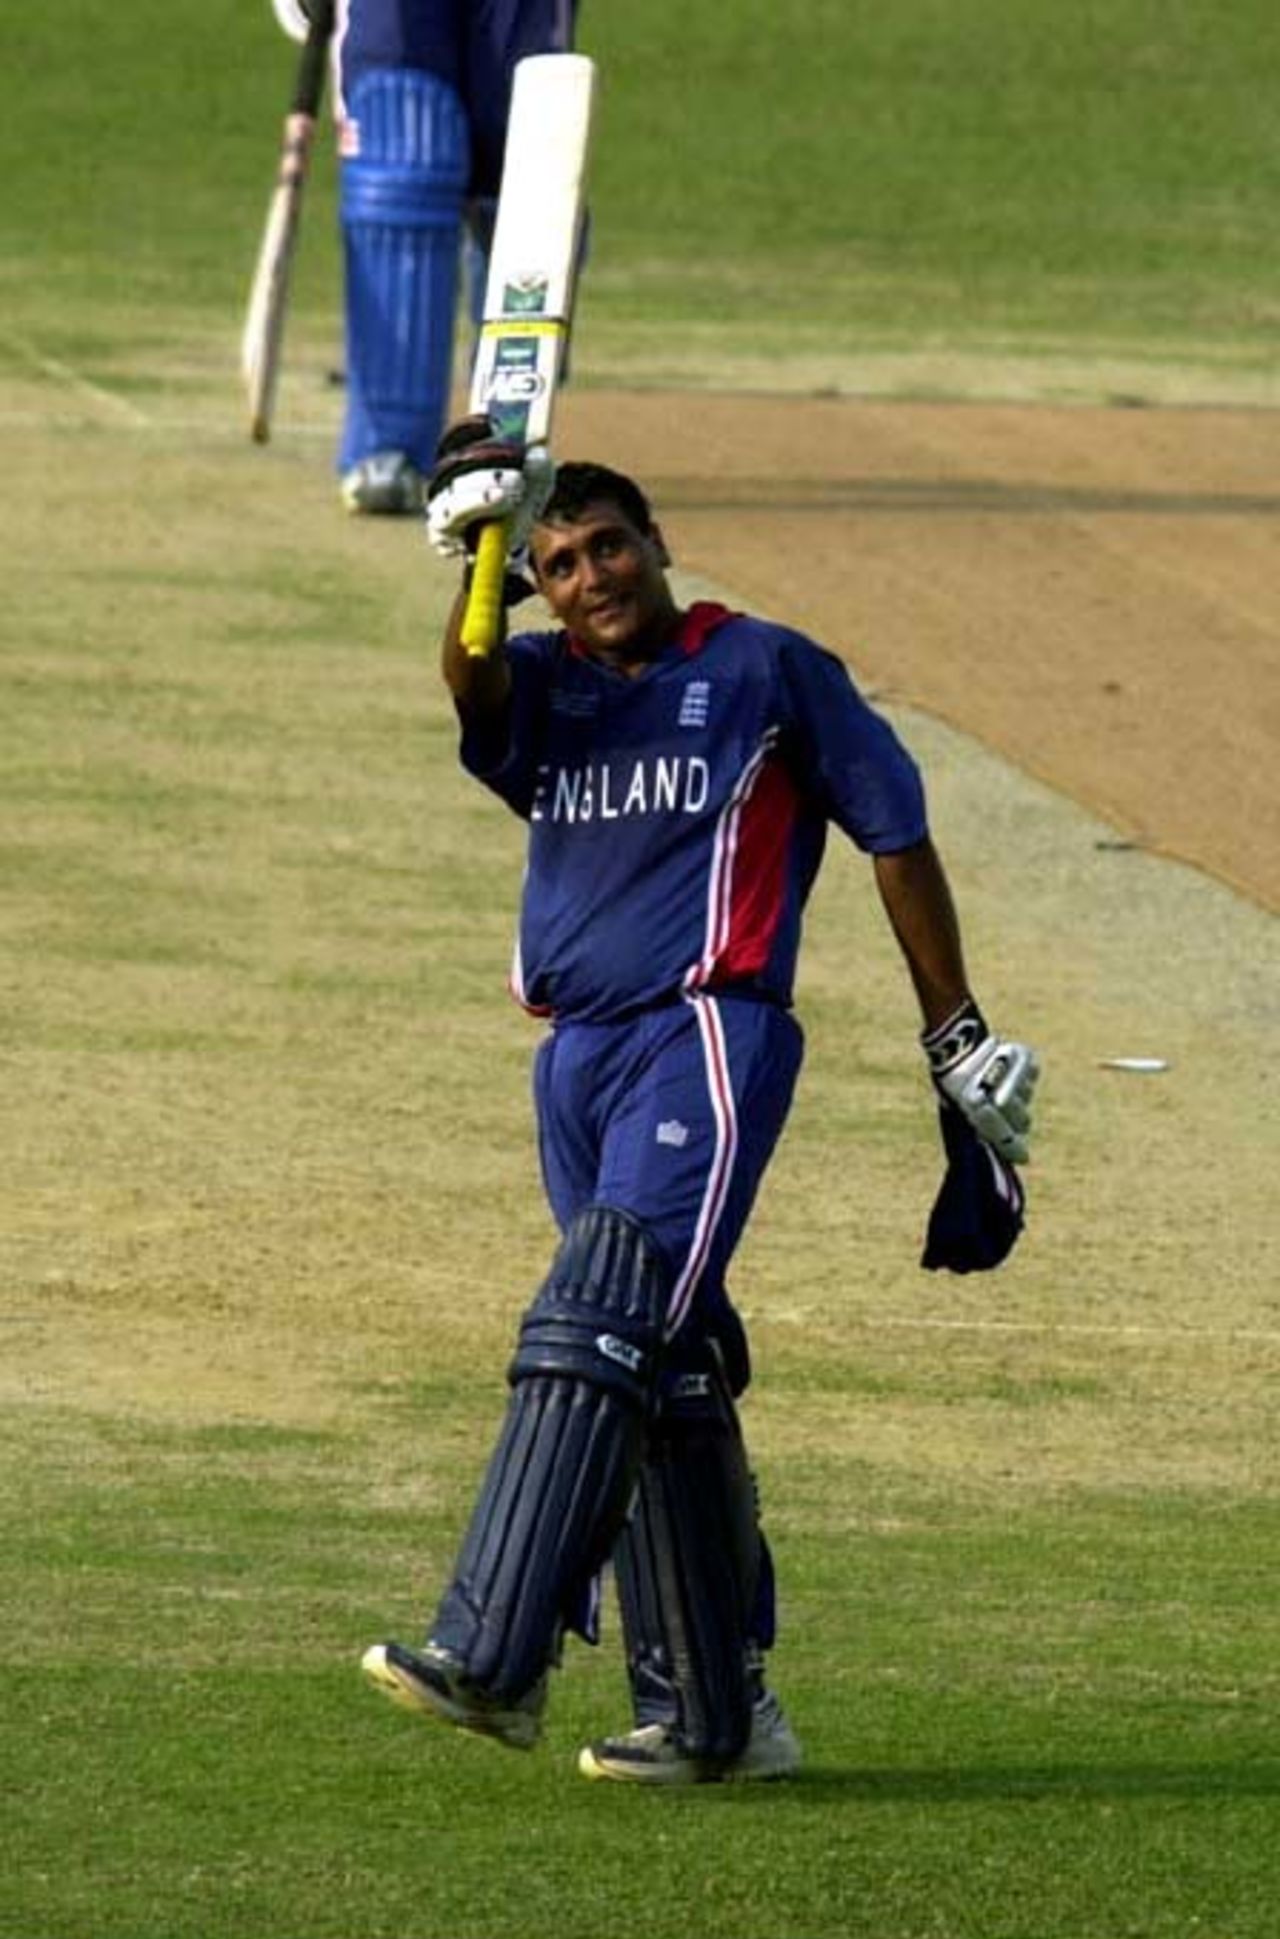 England Batsman S Patel lifts his bat after his century, 23 February 2004 at Dhaka